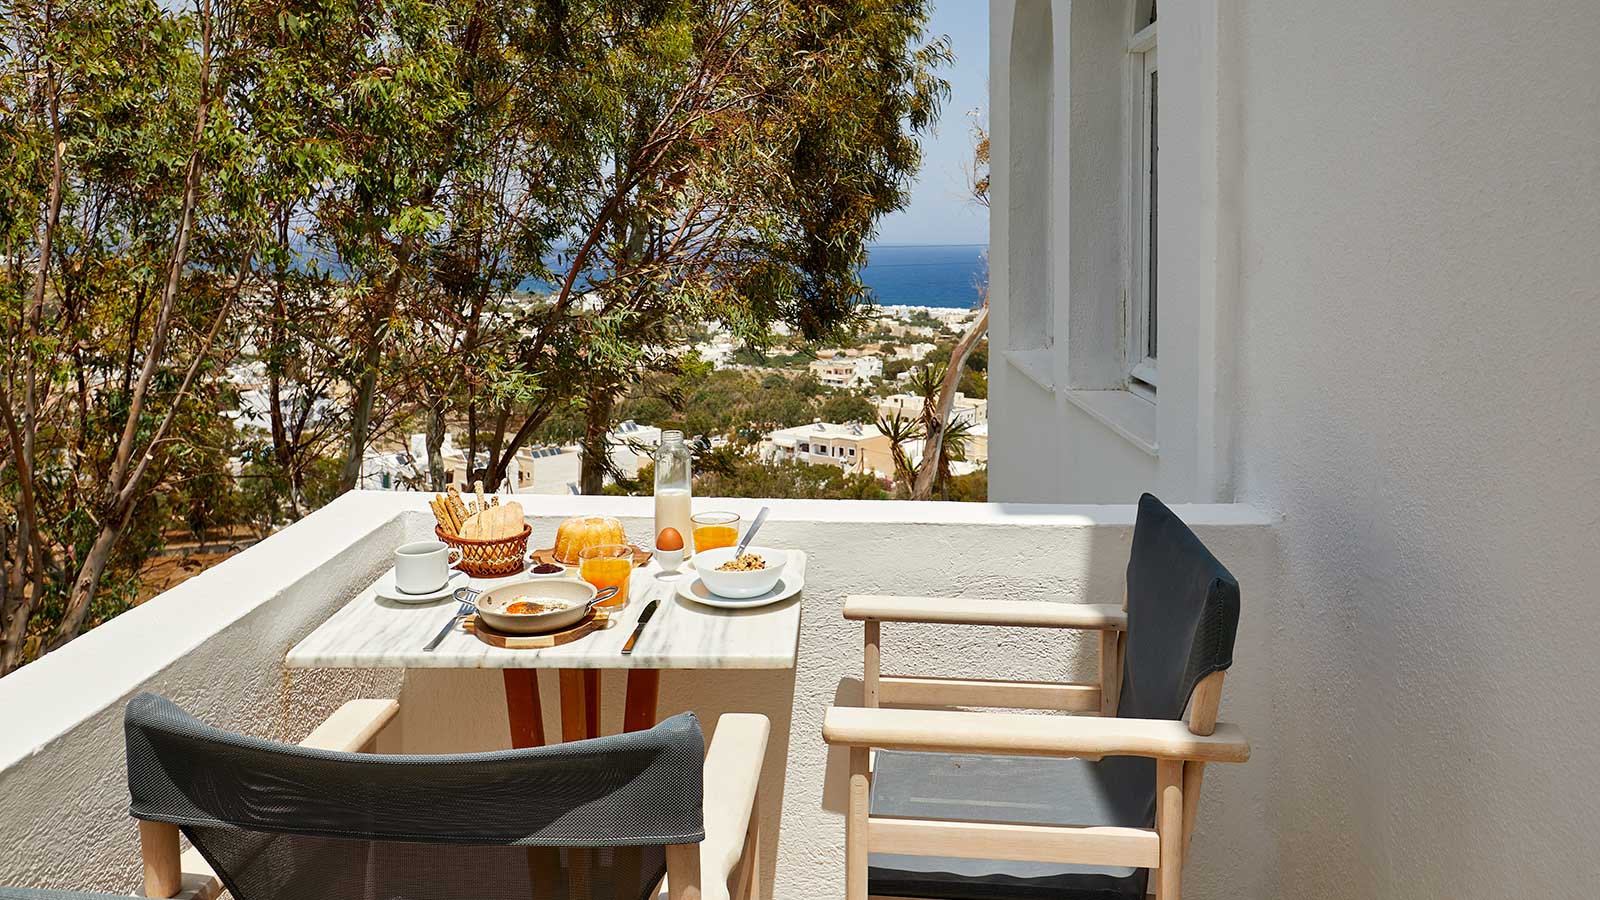 Facilities of Acropole Sunrise Hotel in Santorini, Kamari